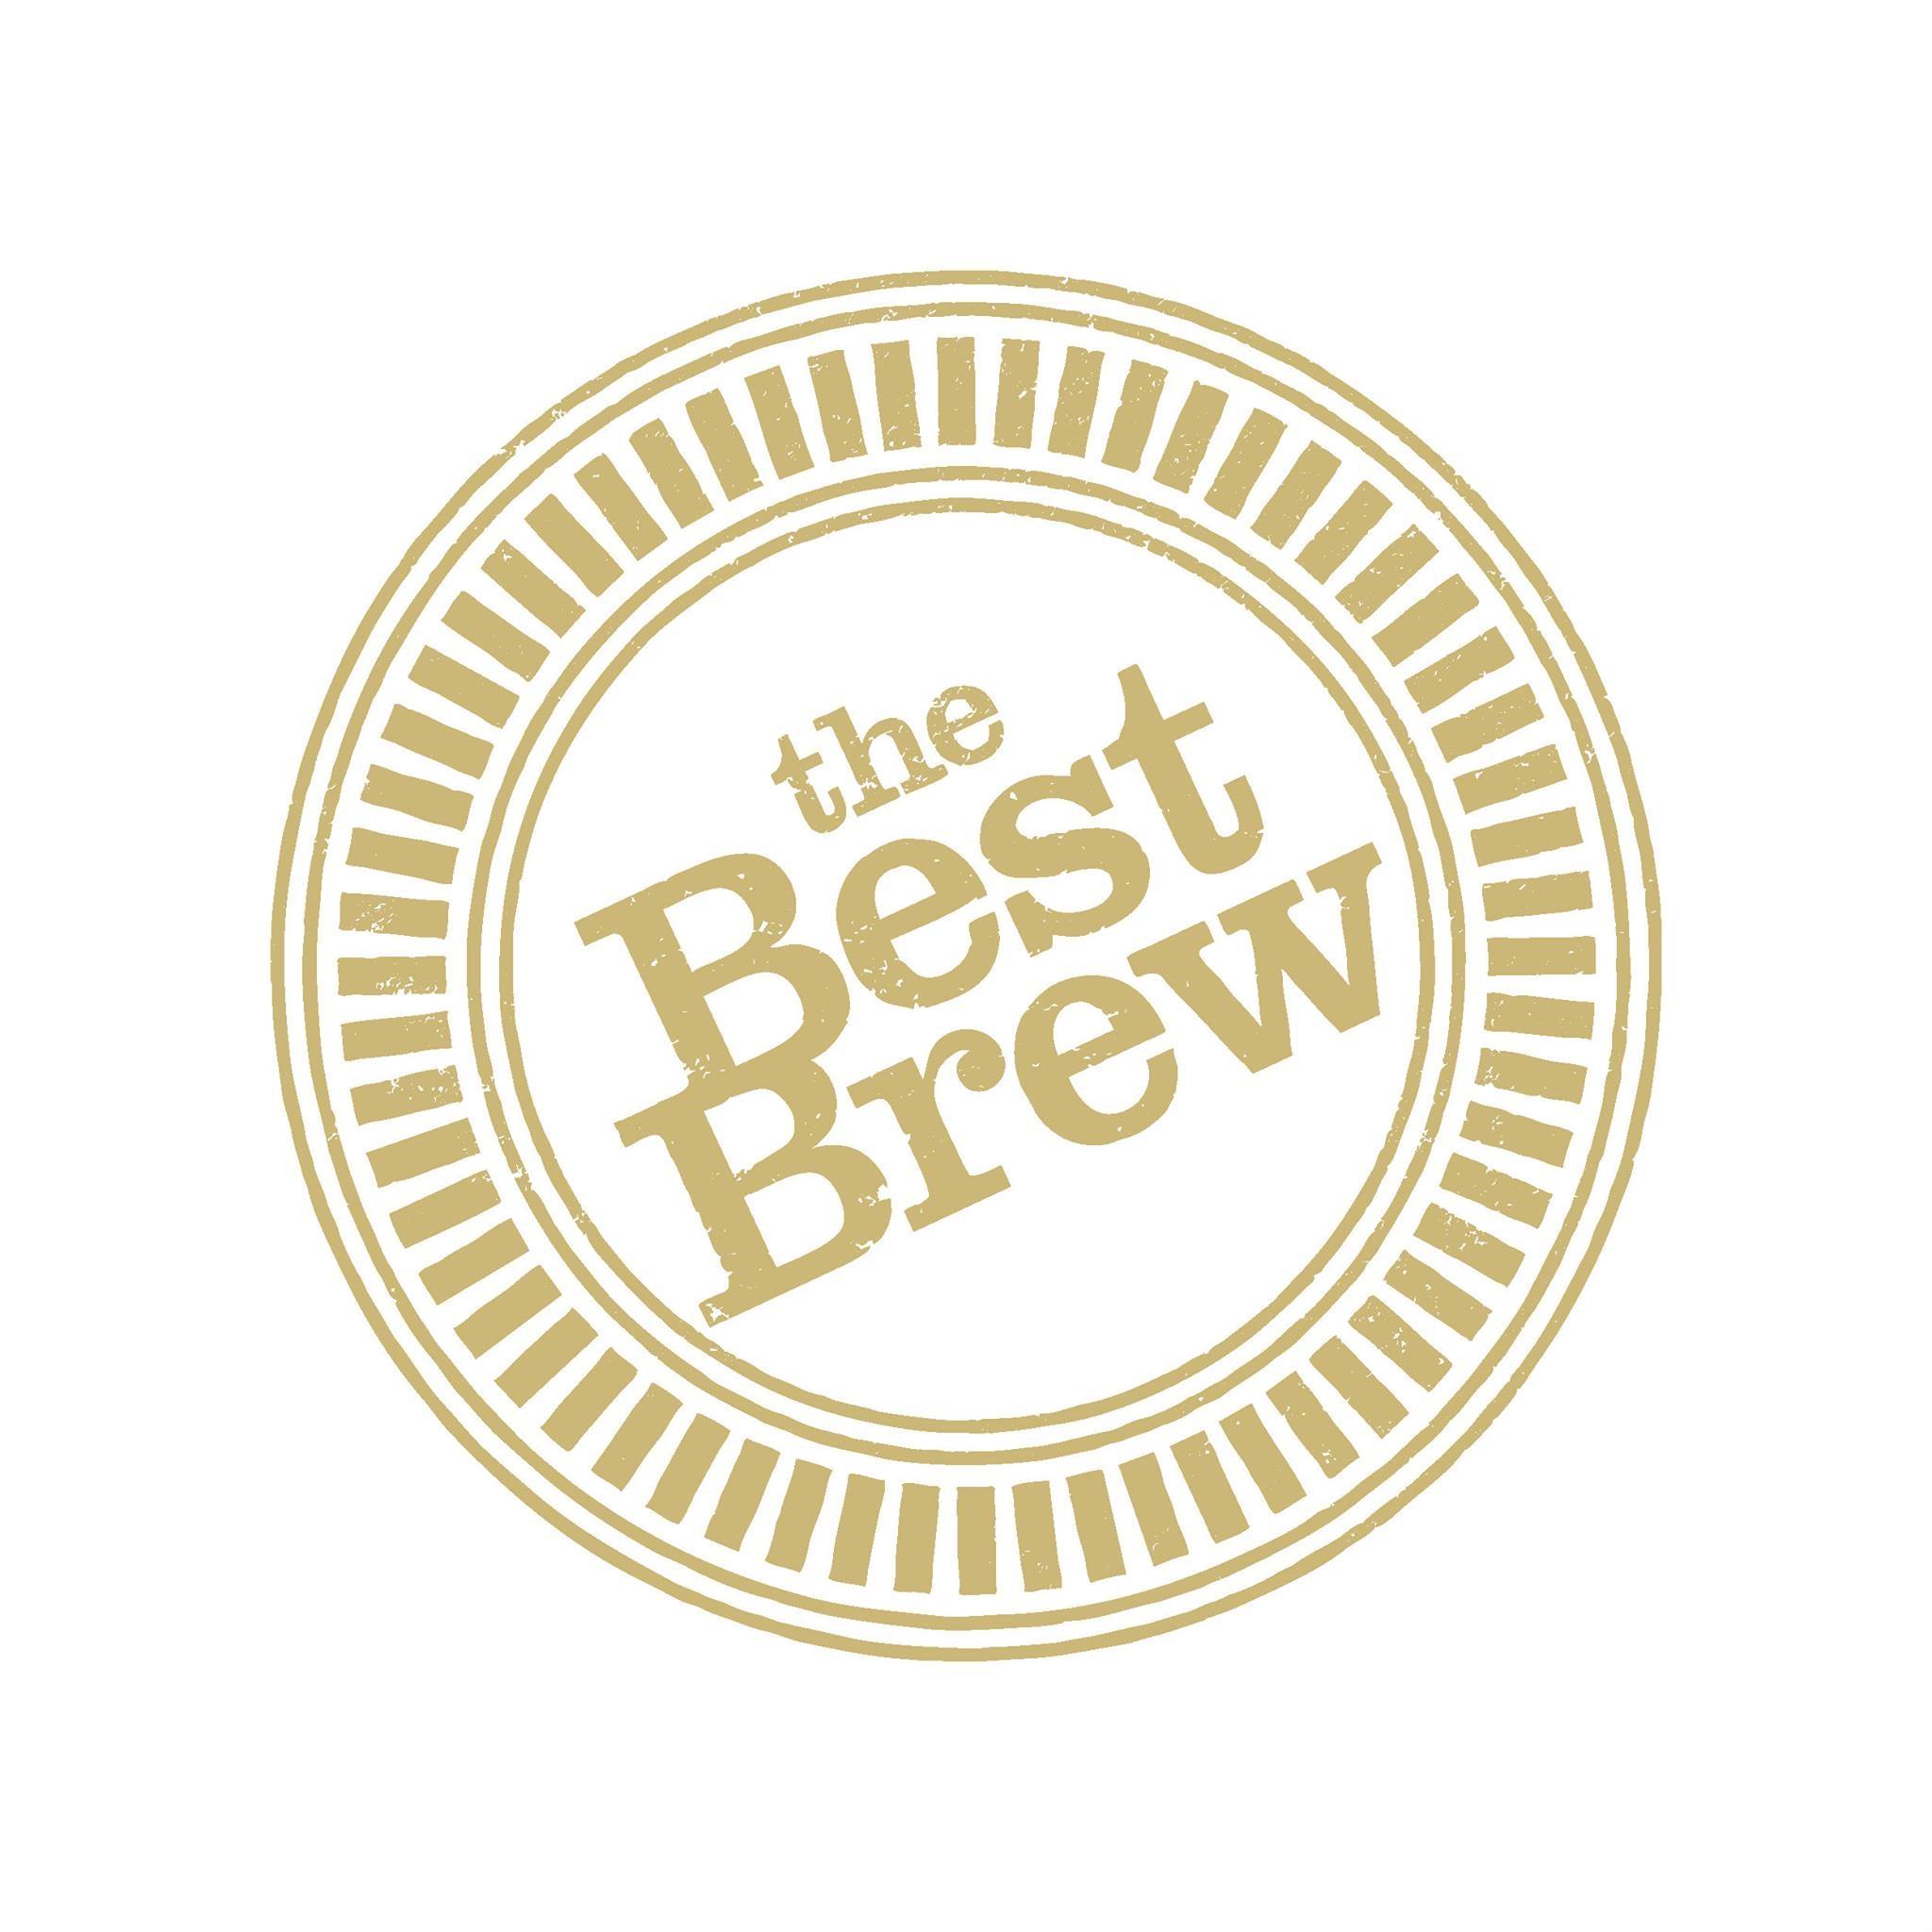 the-best-brew-logo